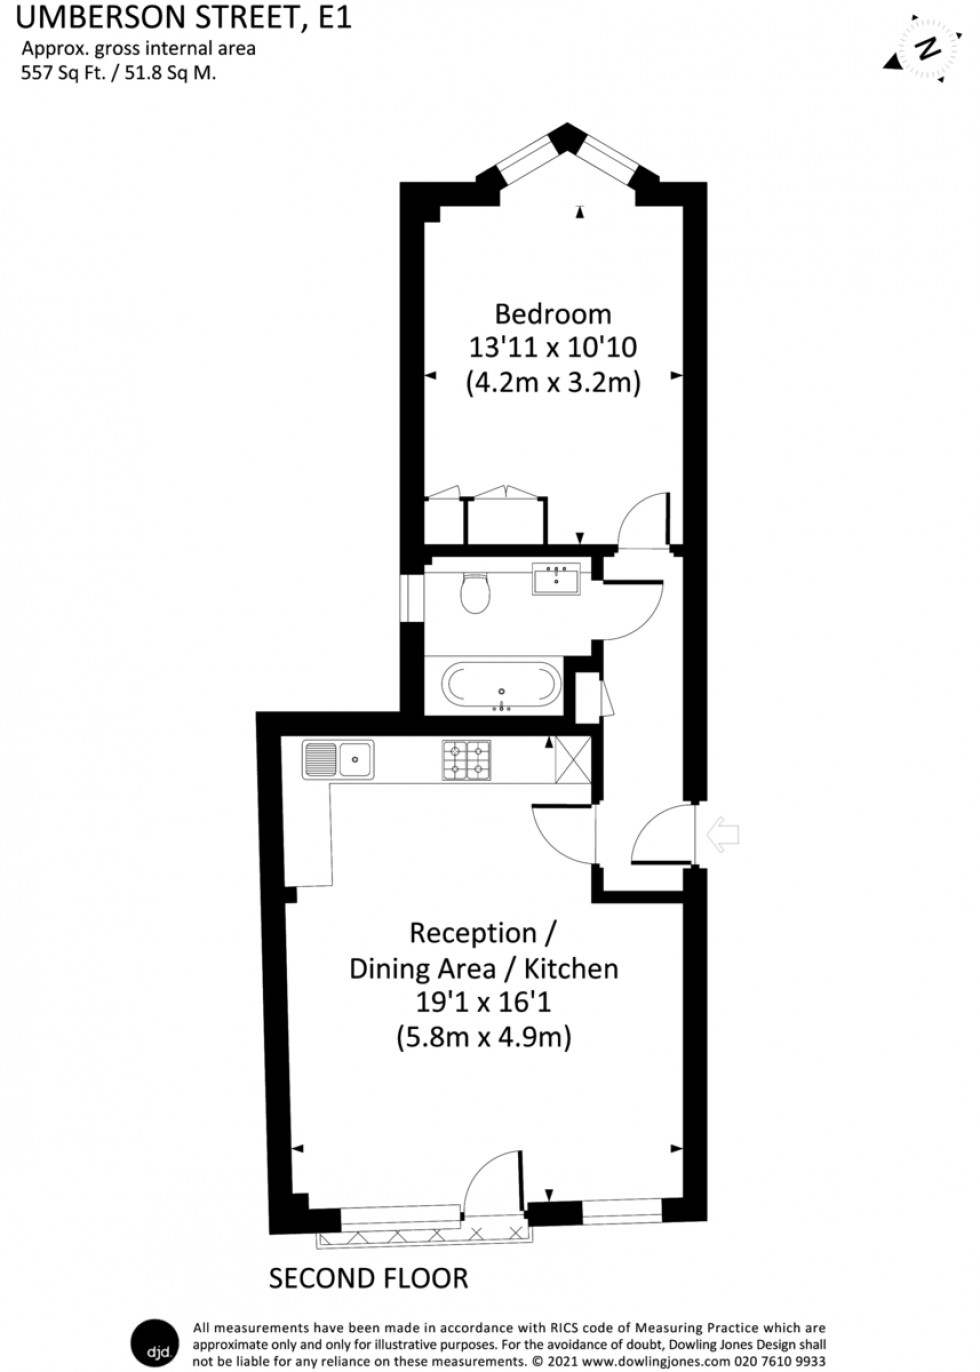 Floorplan for Freetown House, Umberston Street, Whitechapel, London